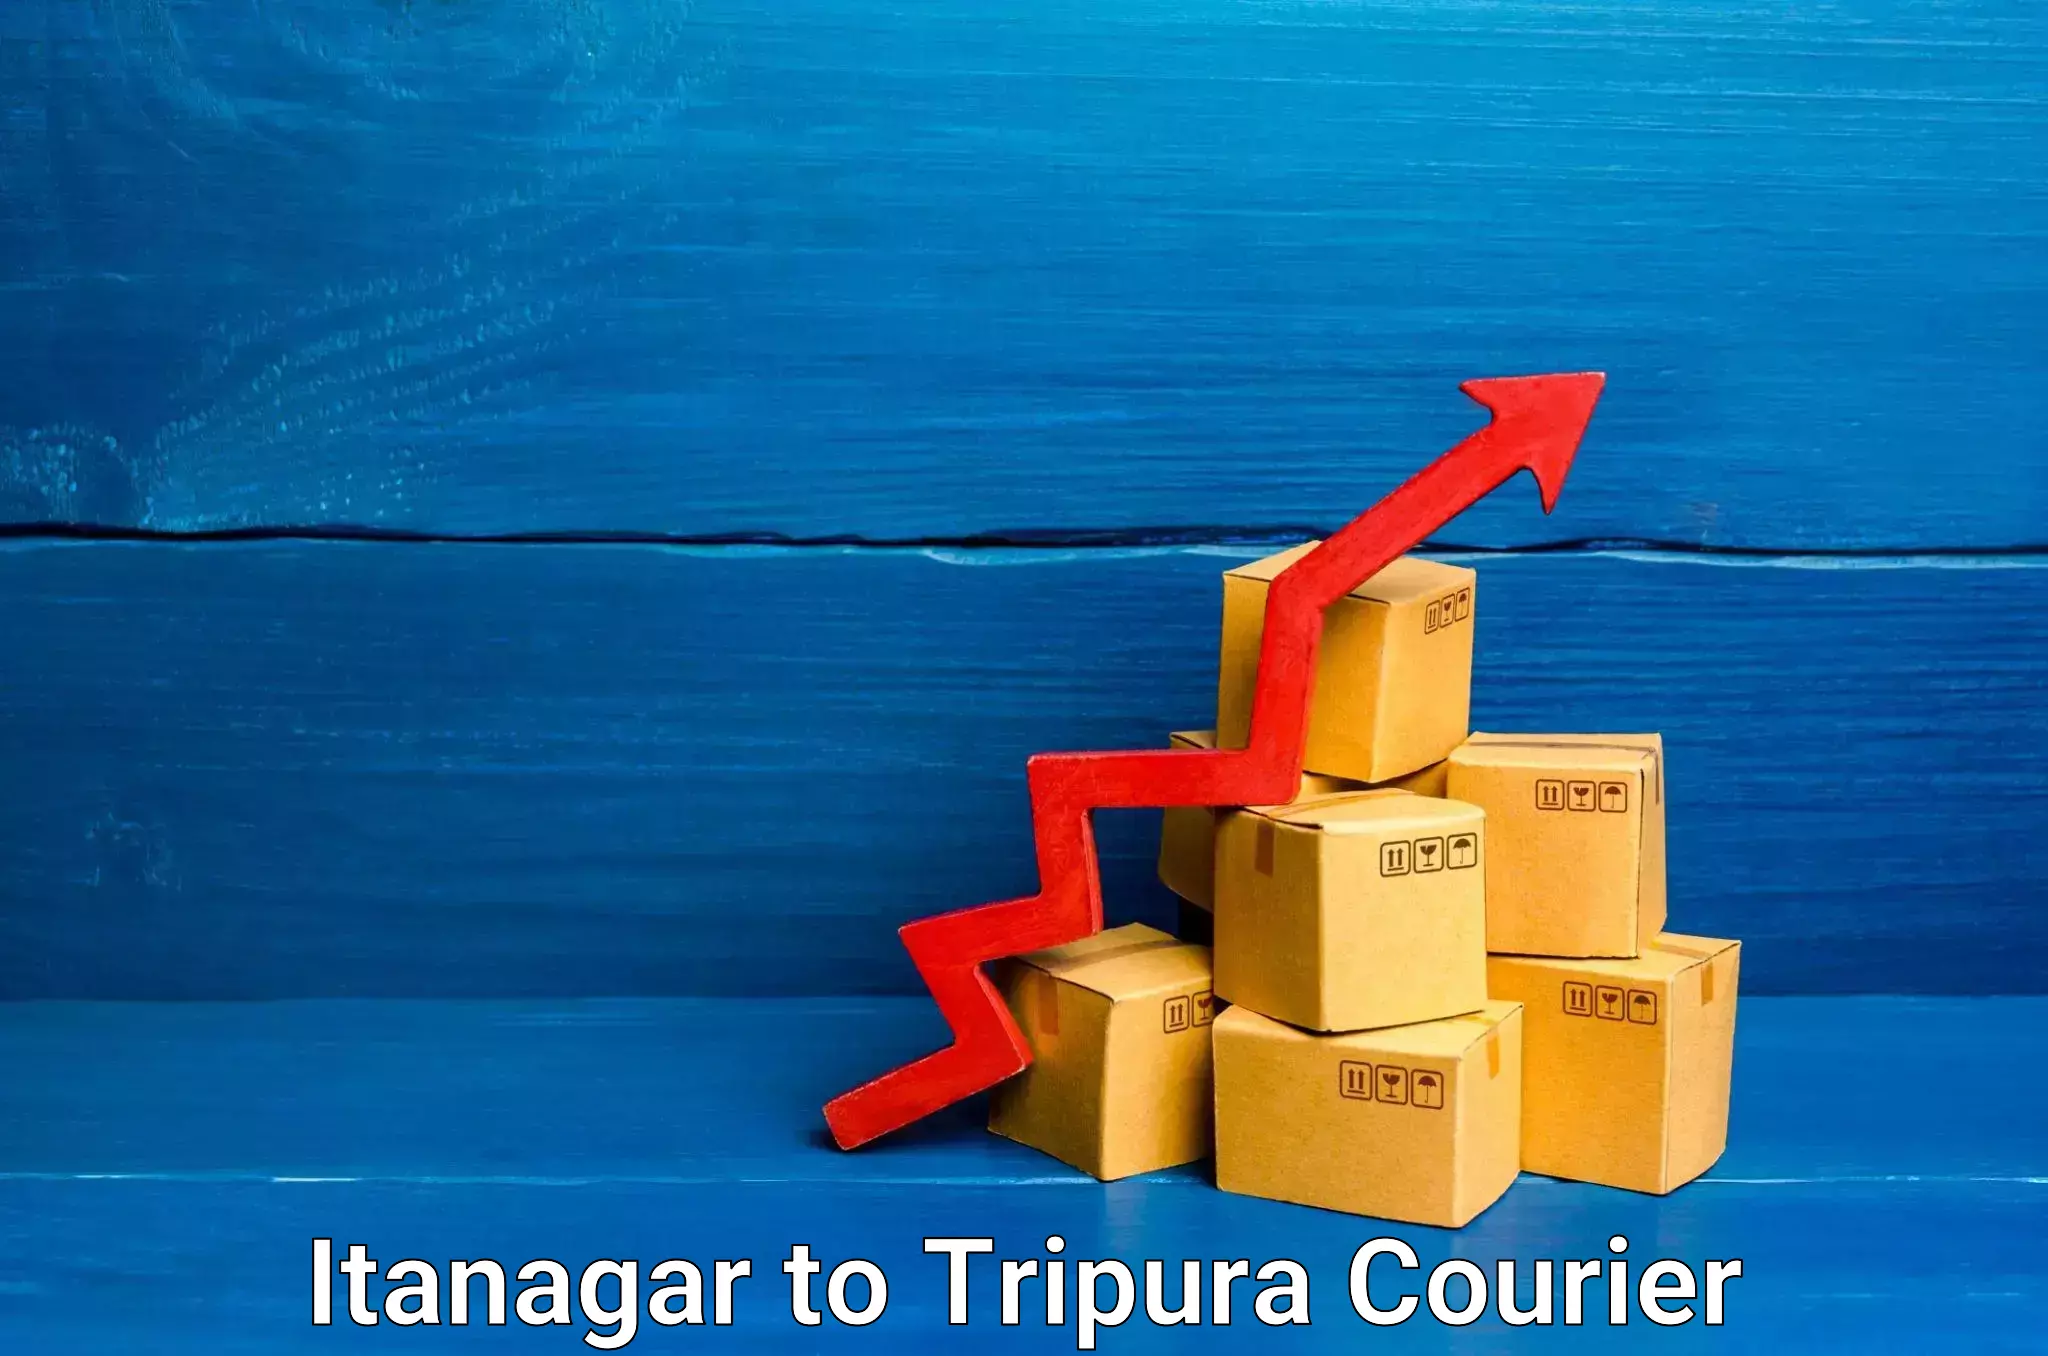 Parcel service for businesses Itanagar to Agartala